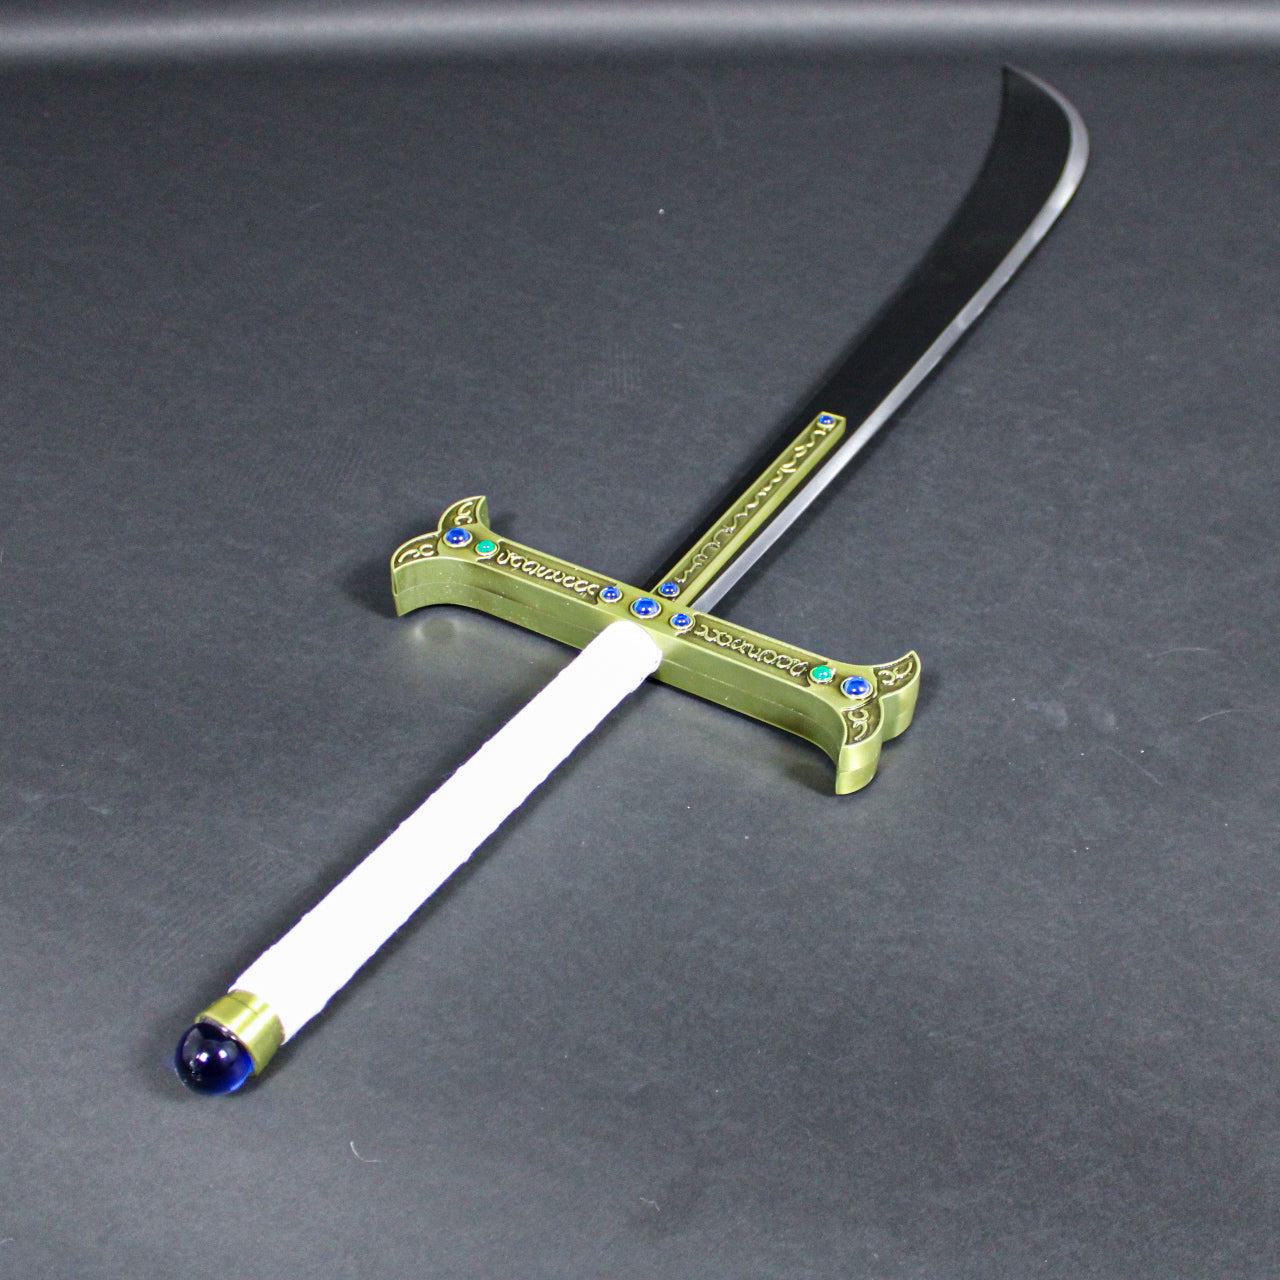 I found Dracule Mihawk's sword, Yoru in some random gift shops in